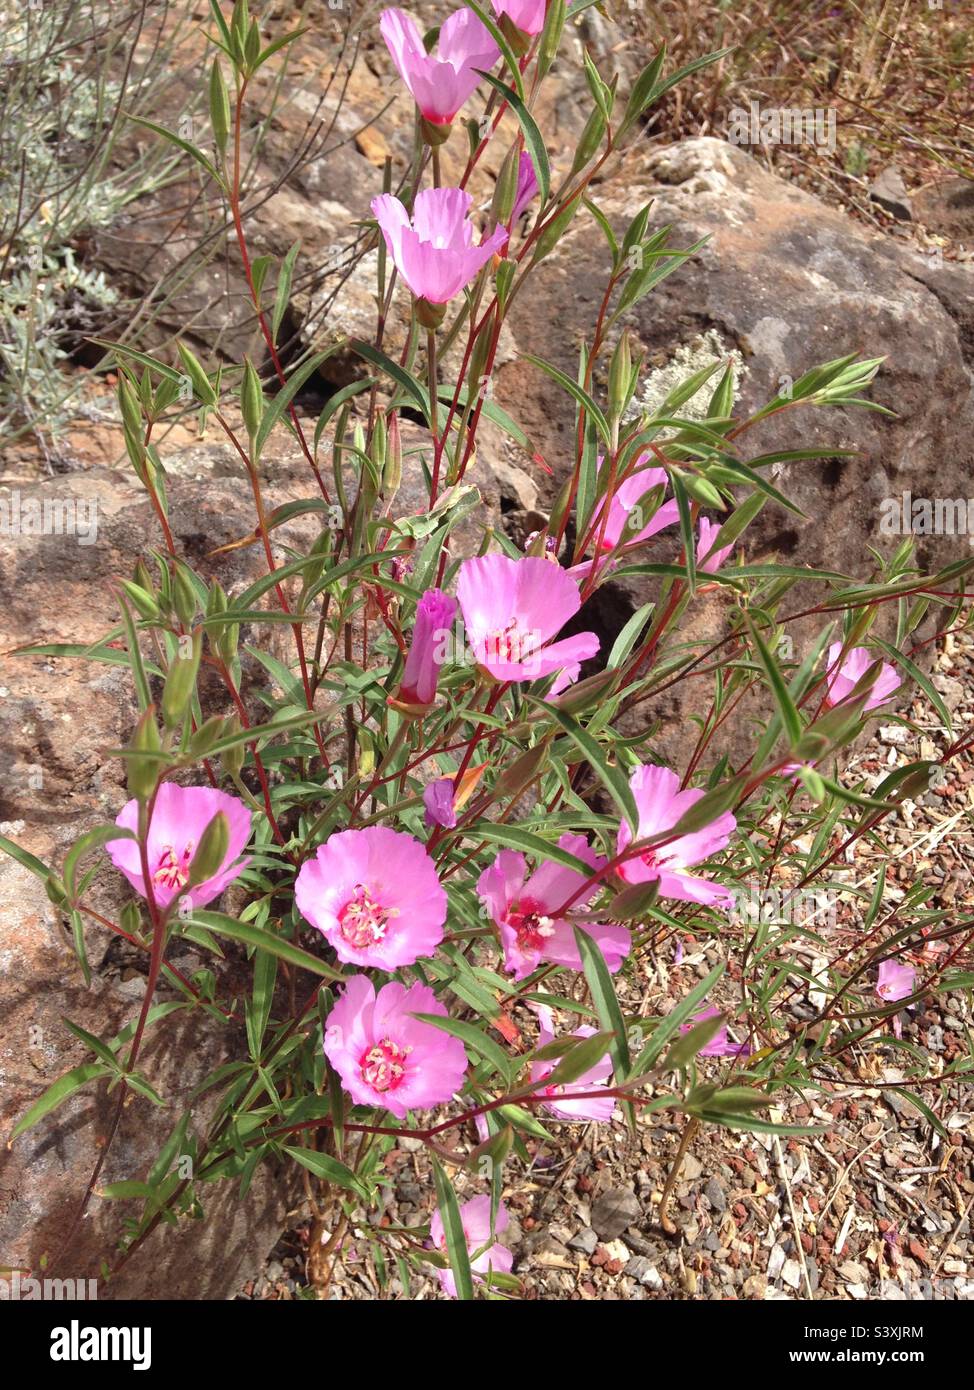 Dainty pink flowers among rocks Stock Photo